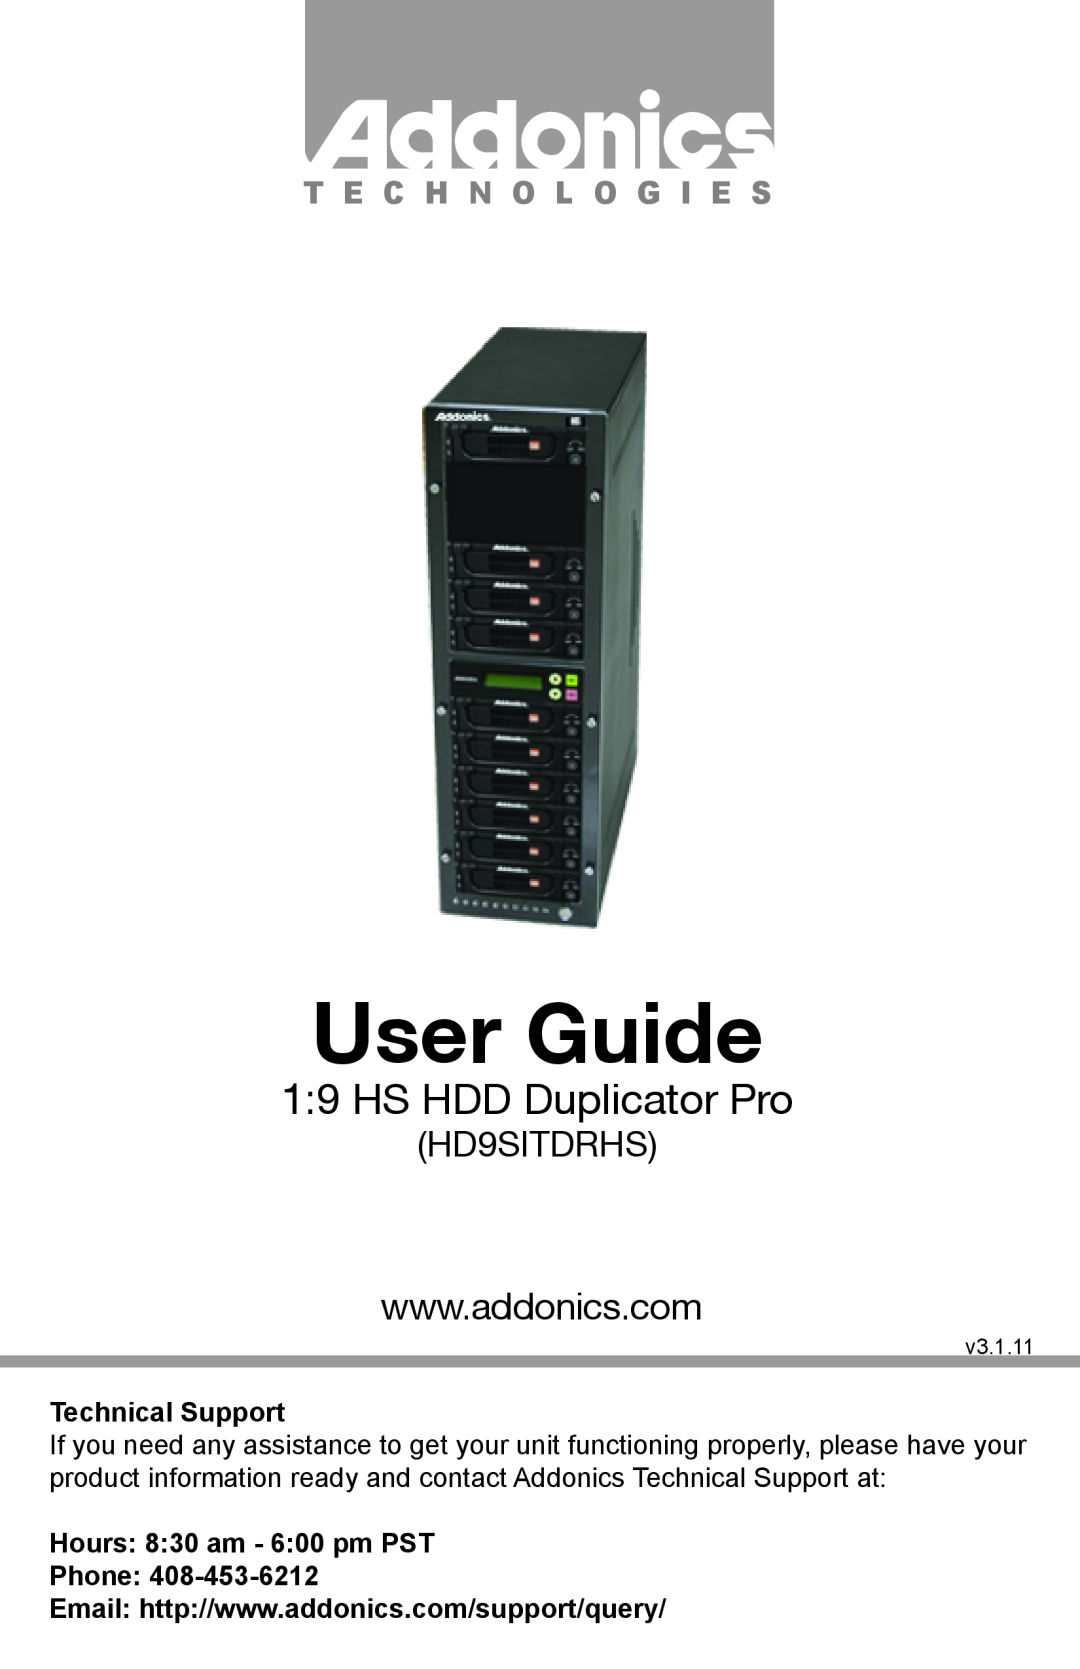 Addonics Technologies HD9SITDRHS manual User Guide, HS HDD Duplicator Pro, T E C H N O L O G I E S, Technical Support 